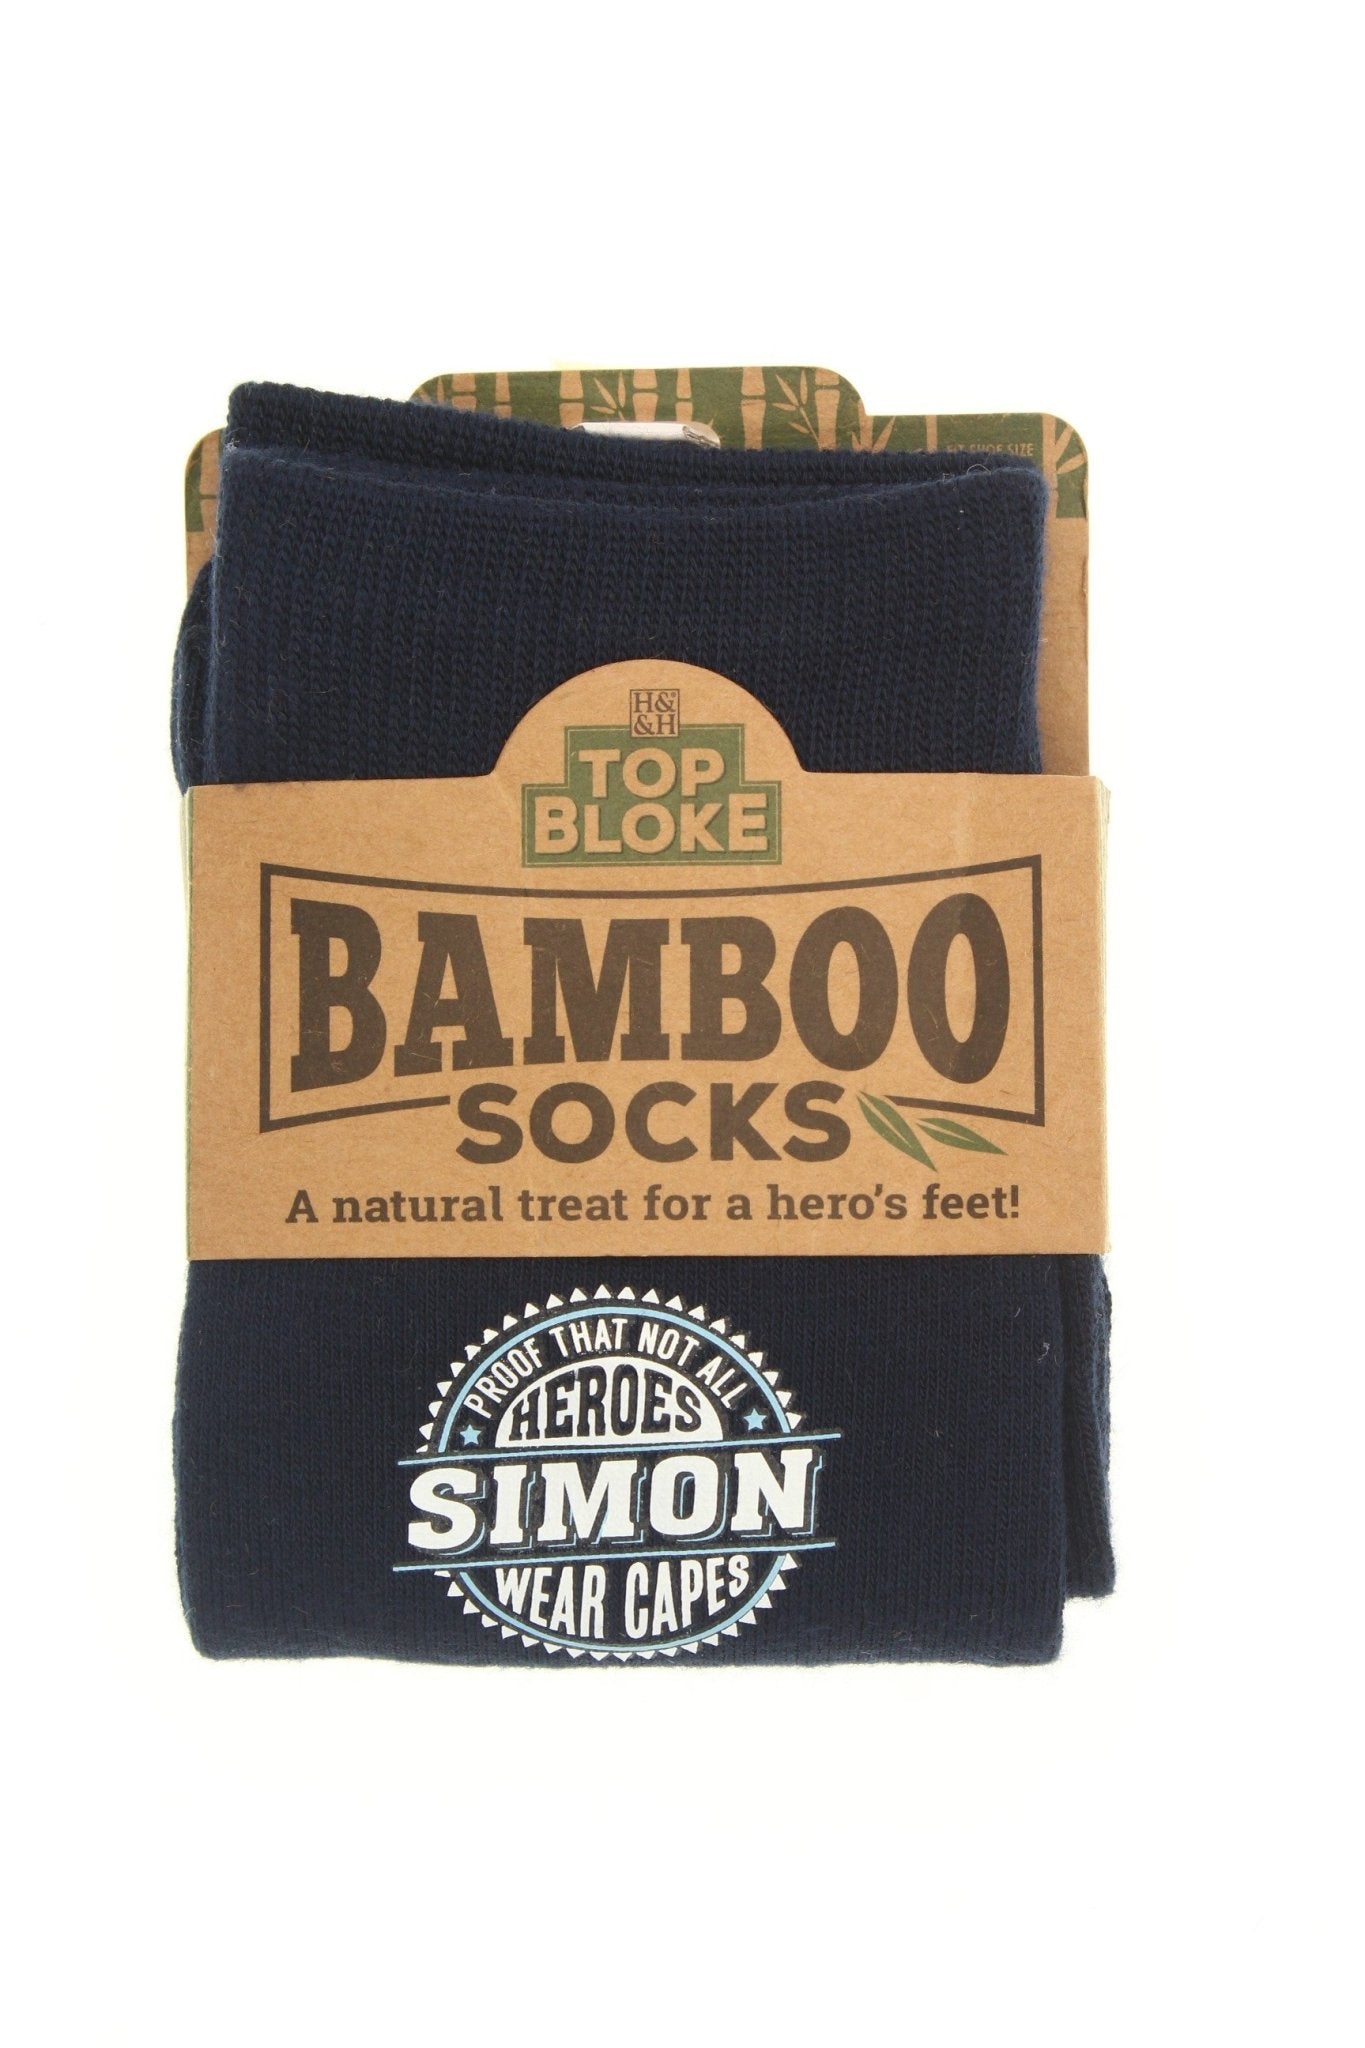 TOP BLOKE BAMBOO SOCKS SIMON